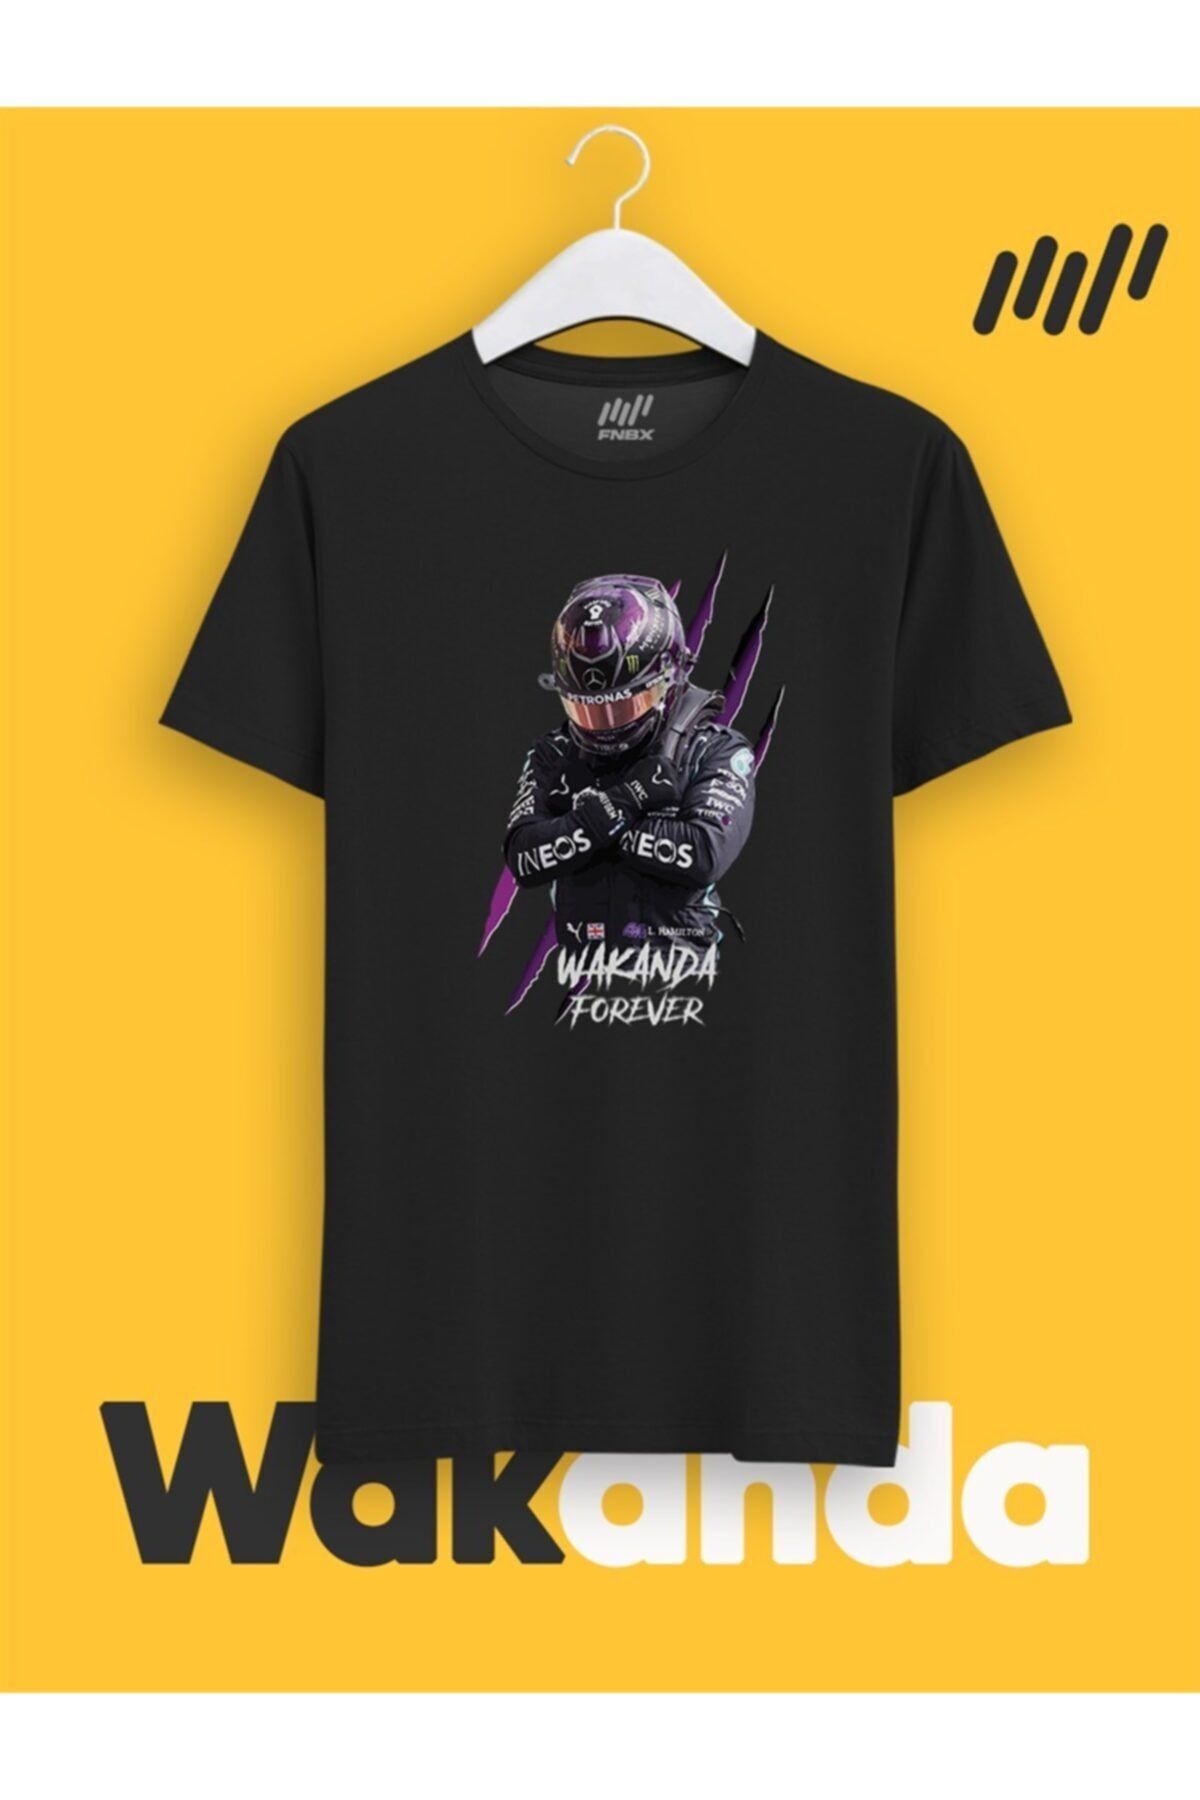 FANBOX SHOP Lewis Hamilton Wakanda Forever T-shirt